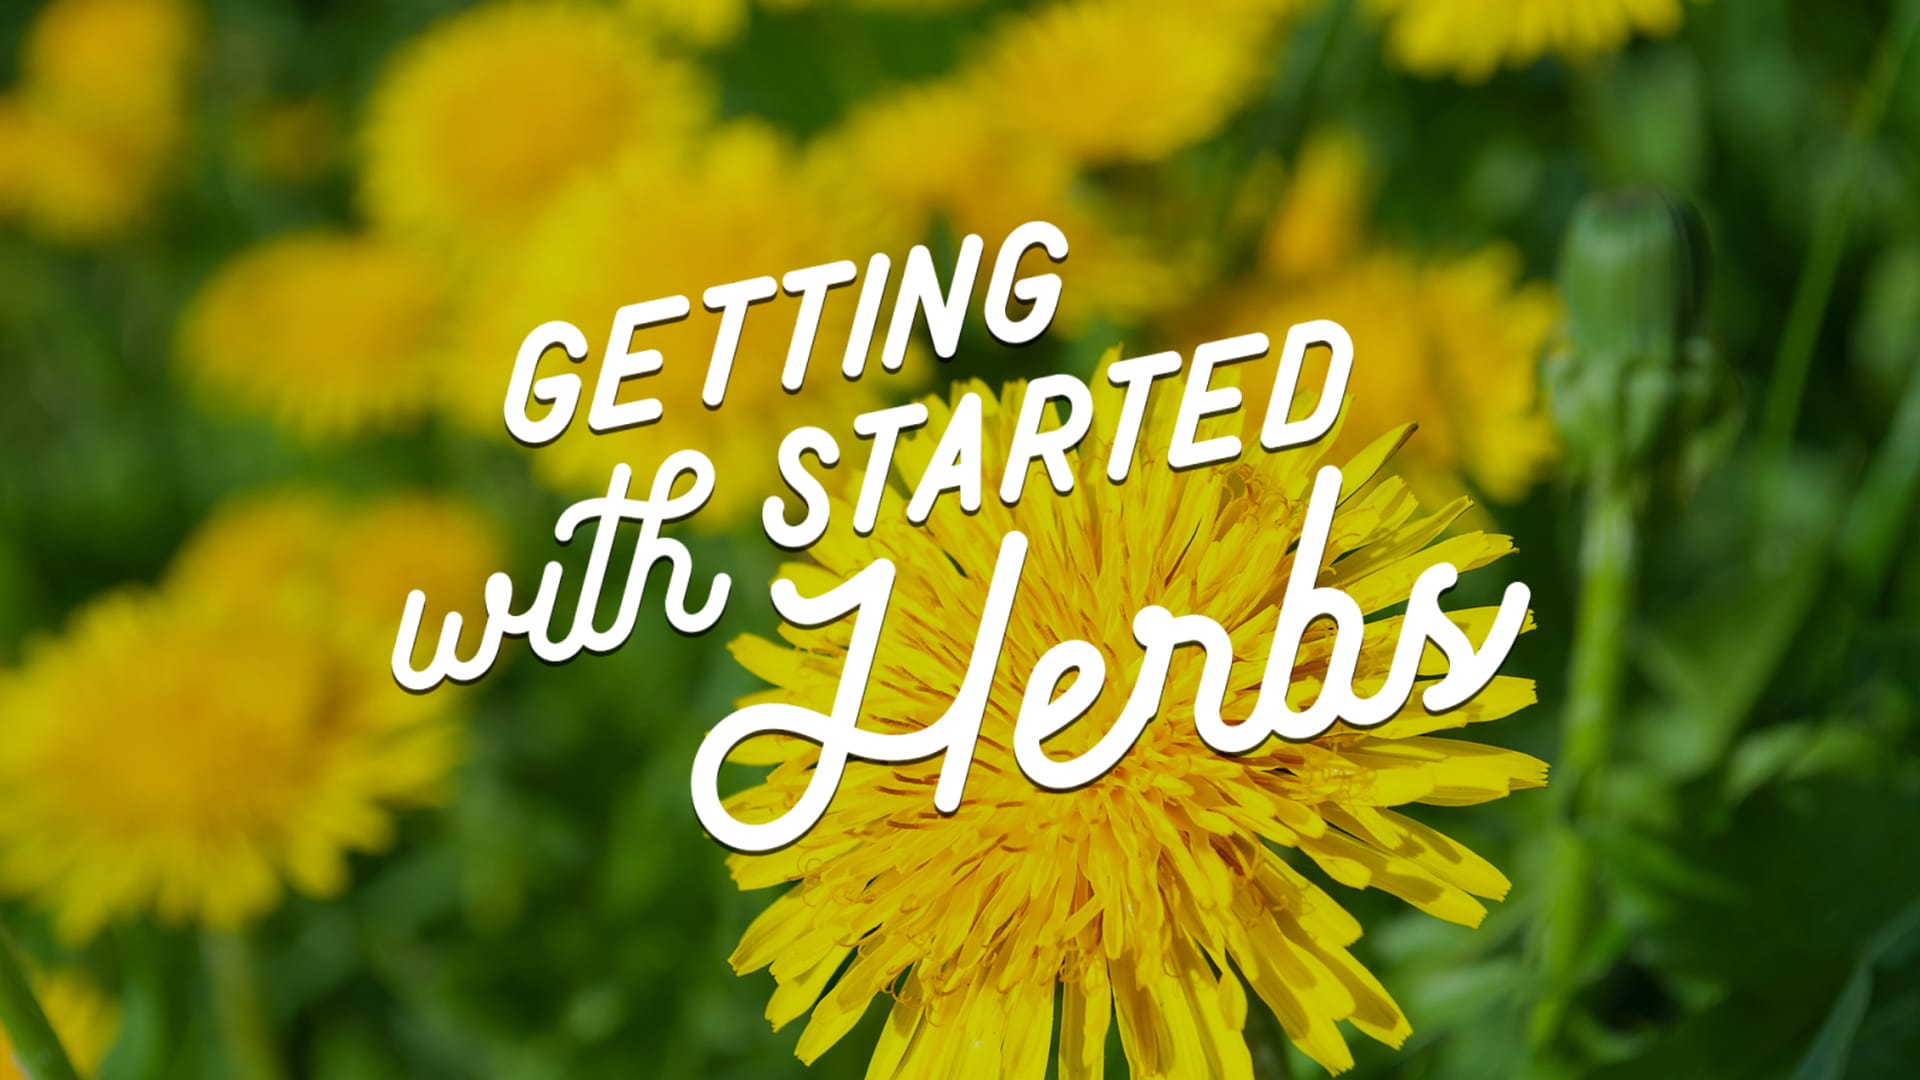 New to Herbs? Start Here